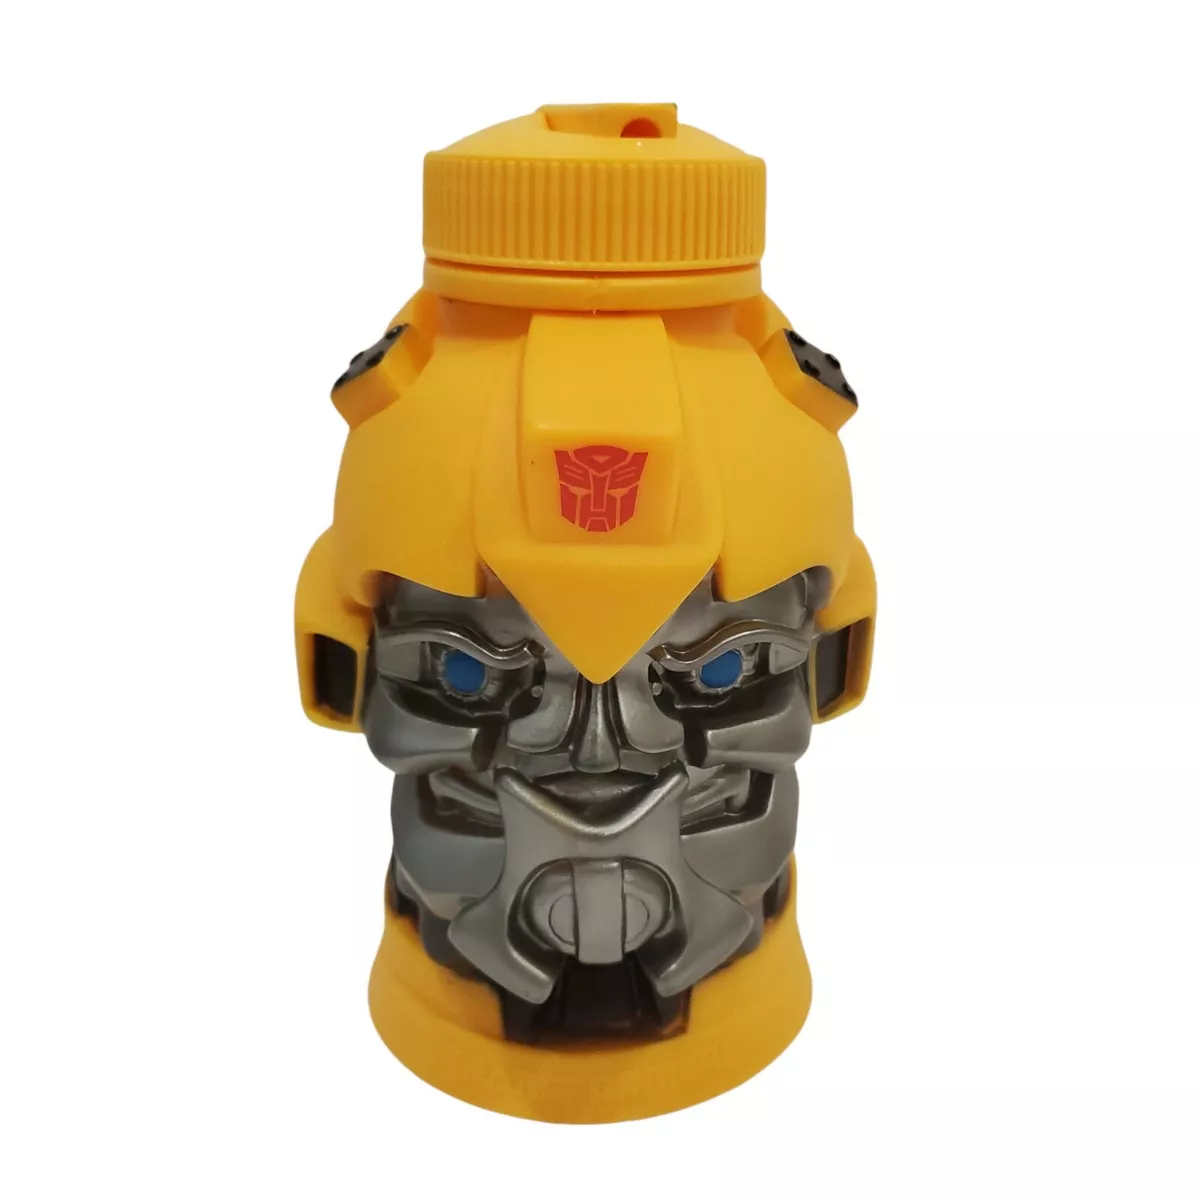 Transformers Bumblebee NBE2 B-127 Acrylic Travel Tumbler Water